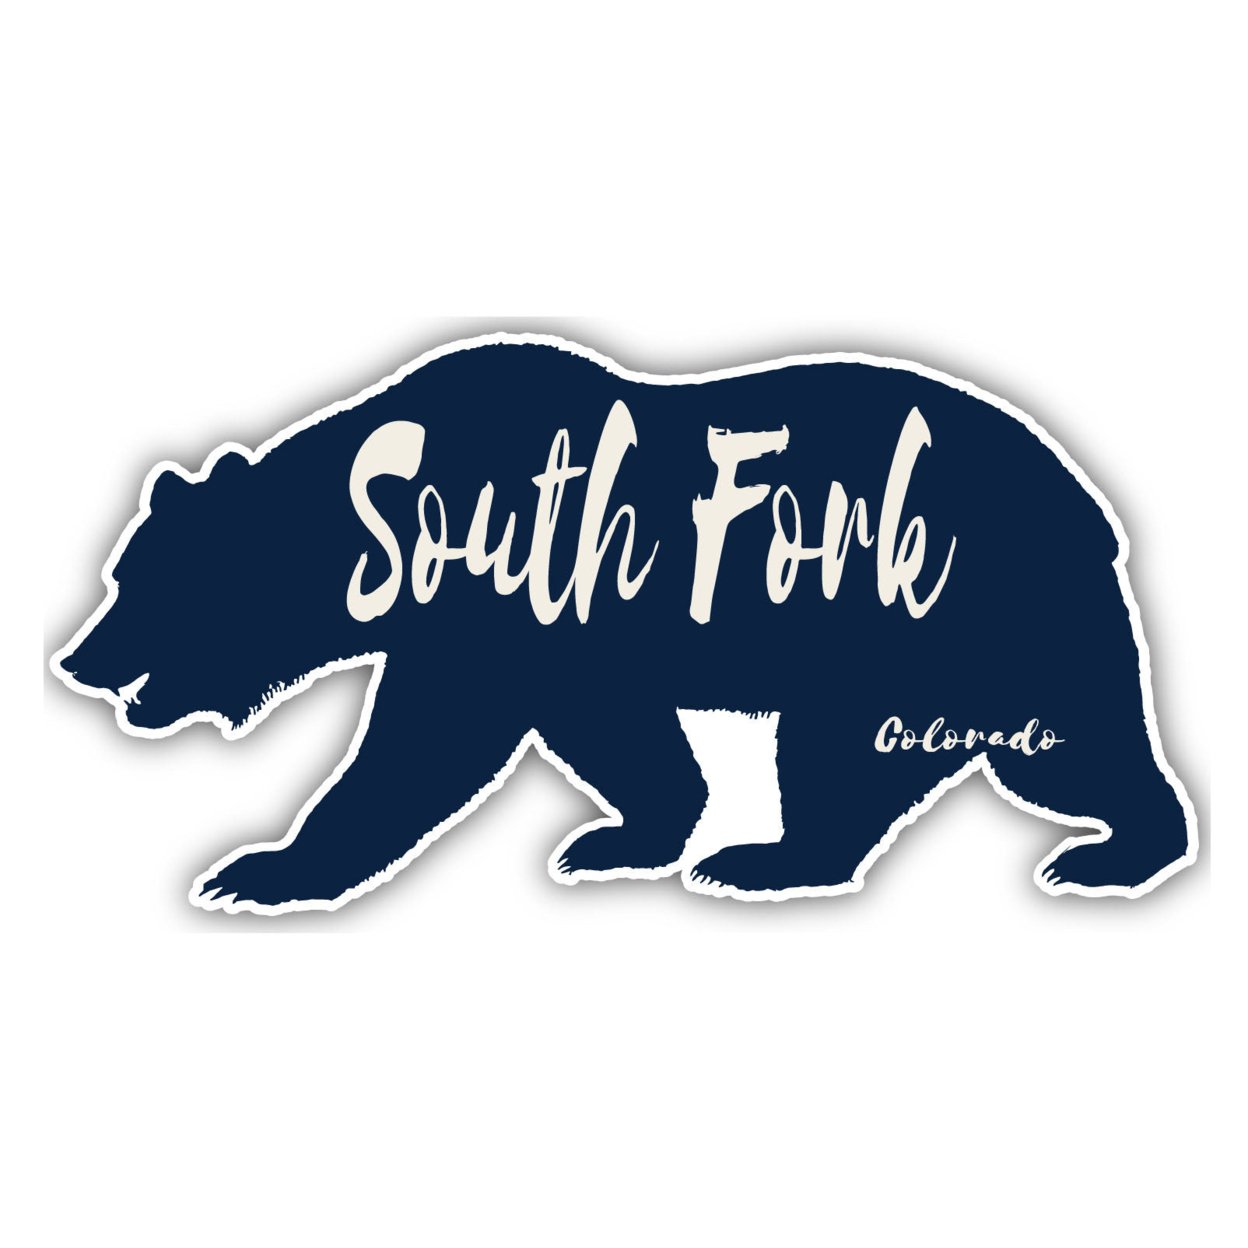 South Fork Colorado Souvenir Decorative Stickers (Choose Theme And Size) - Single Unit, 2-Inch, Camp Life